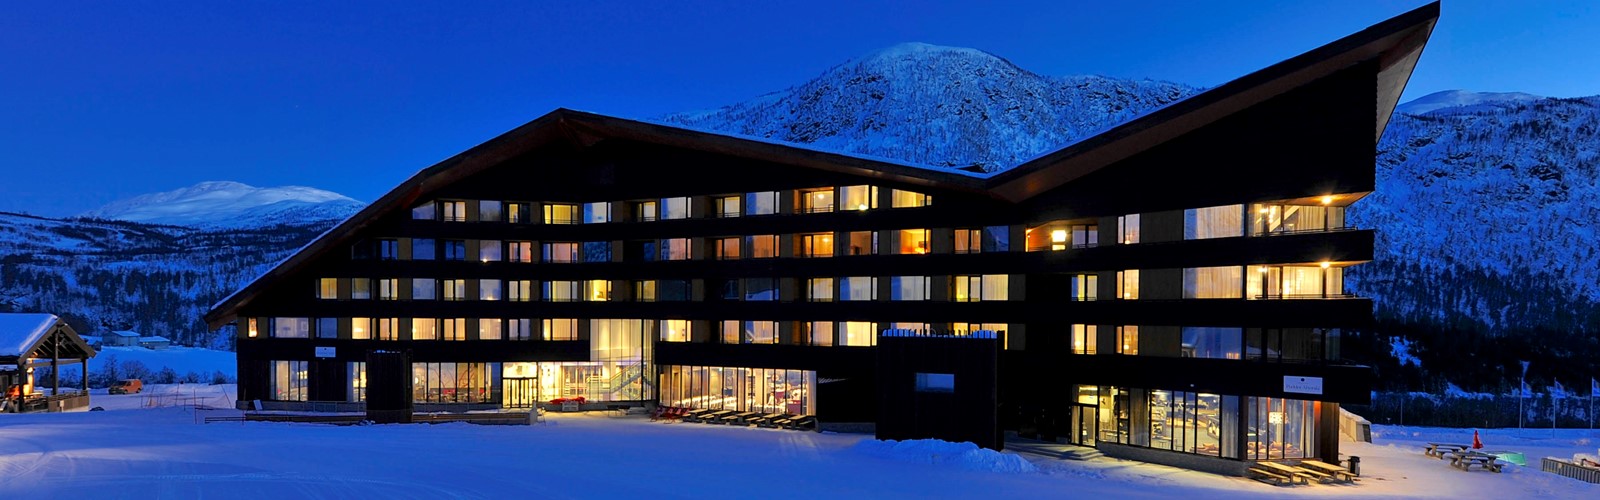 Winter evening at Myrkdalen Hotel Credit Nils Petter Dale.jpg